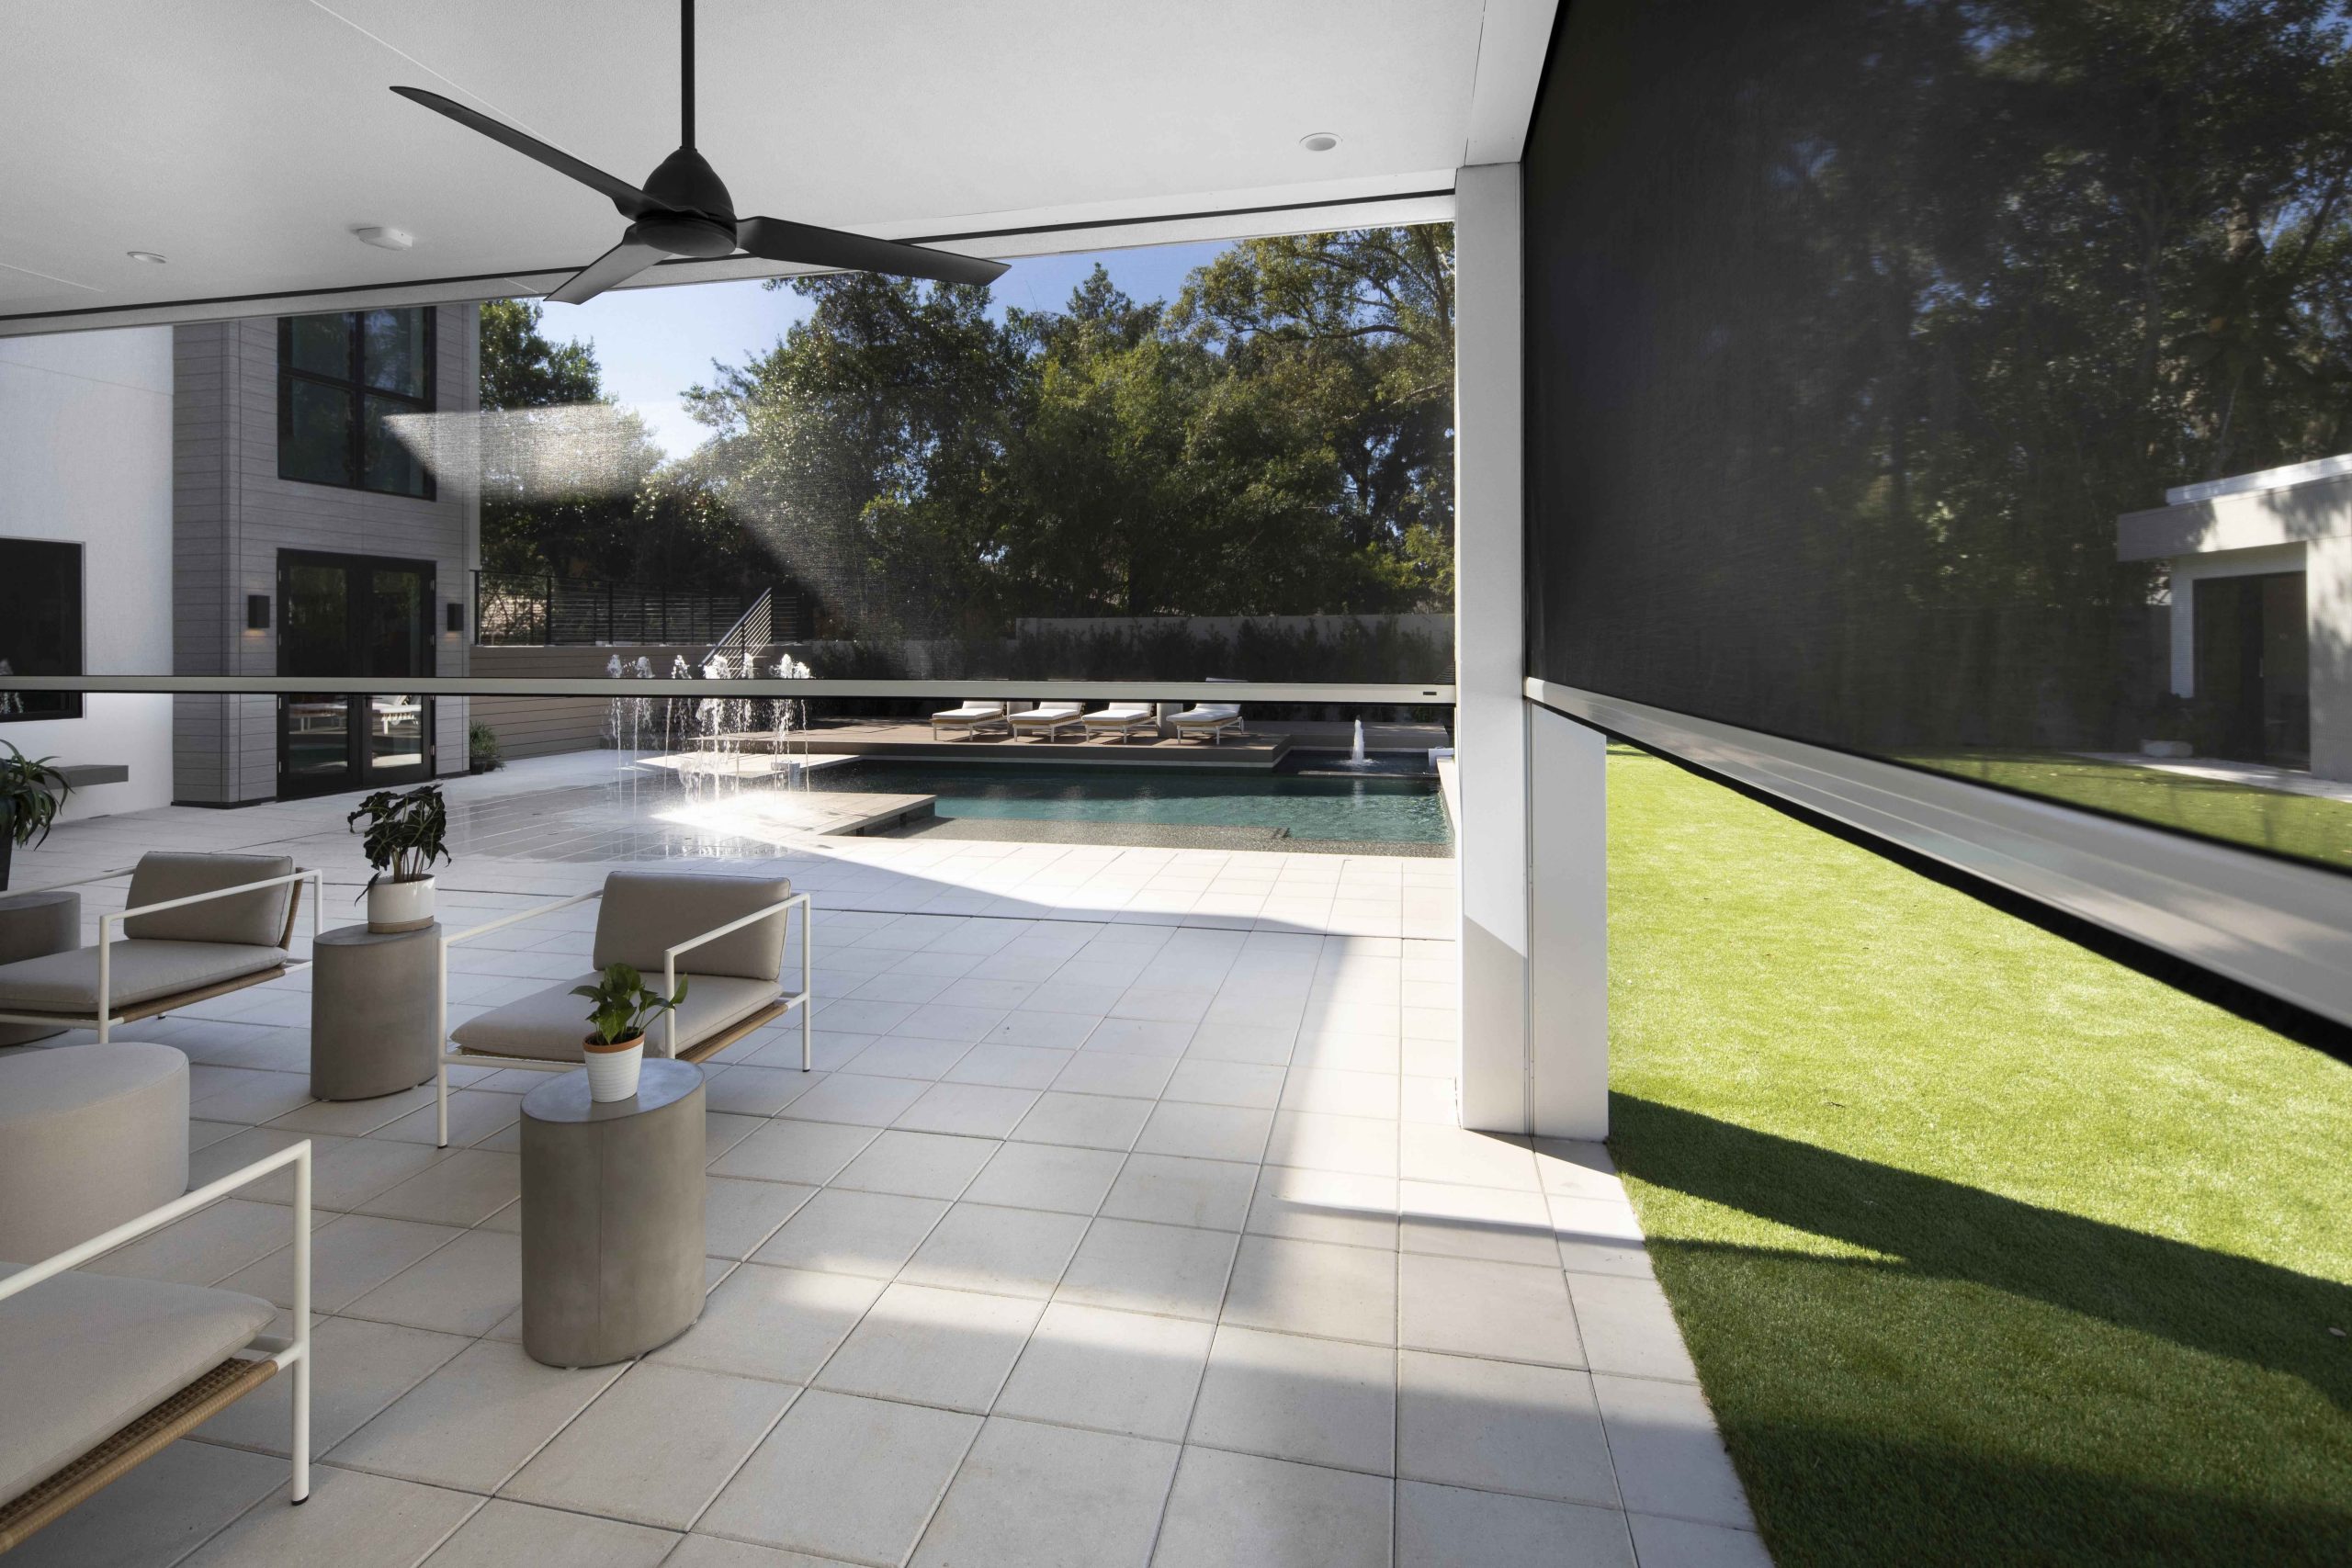 Luxury poolside patio wth retractable motorized screens